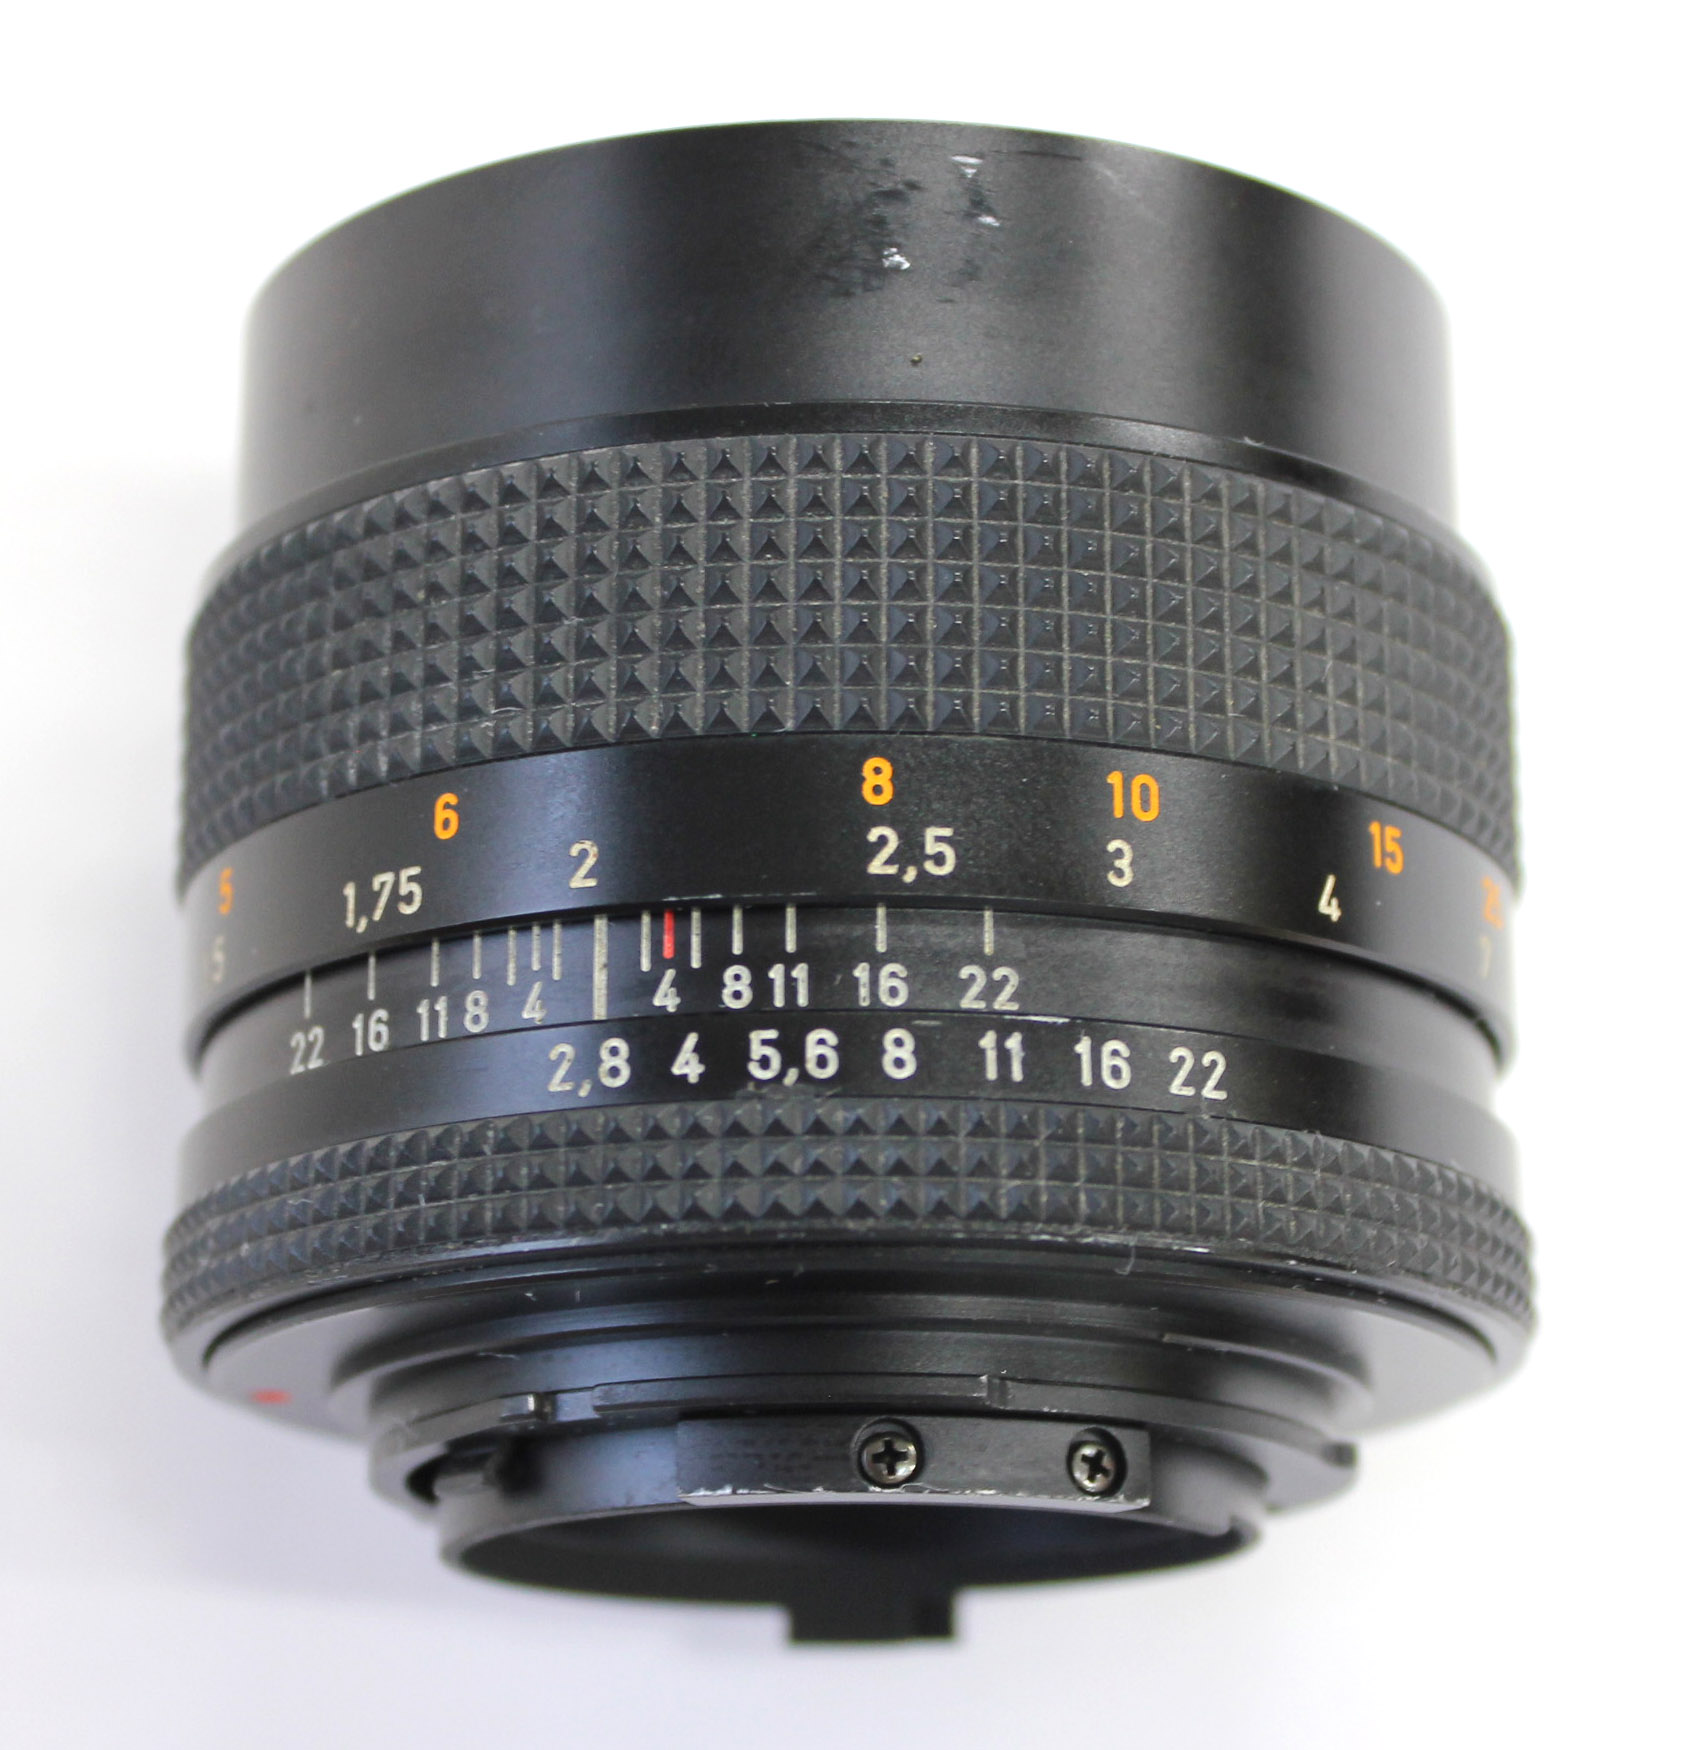  Carl Zeiss Sonnar T* 85mm F/2.8 AEG Lens from Japan  Photo 3